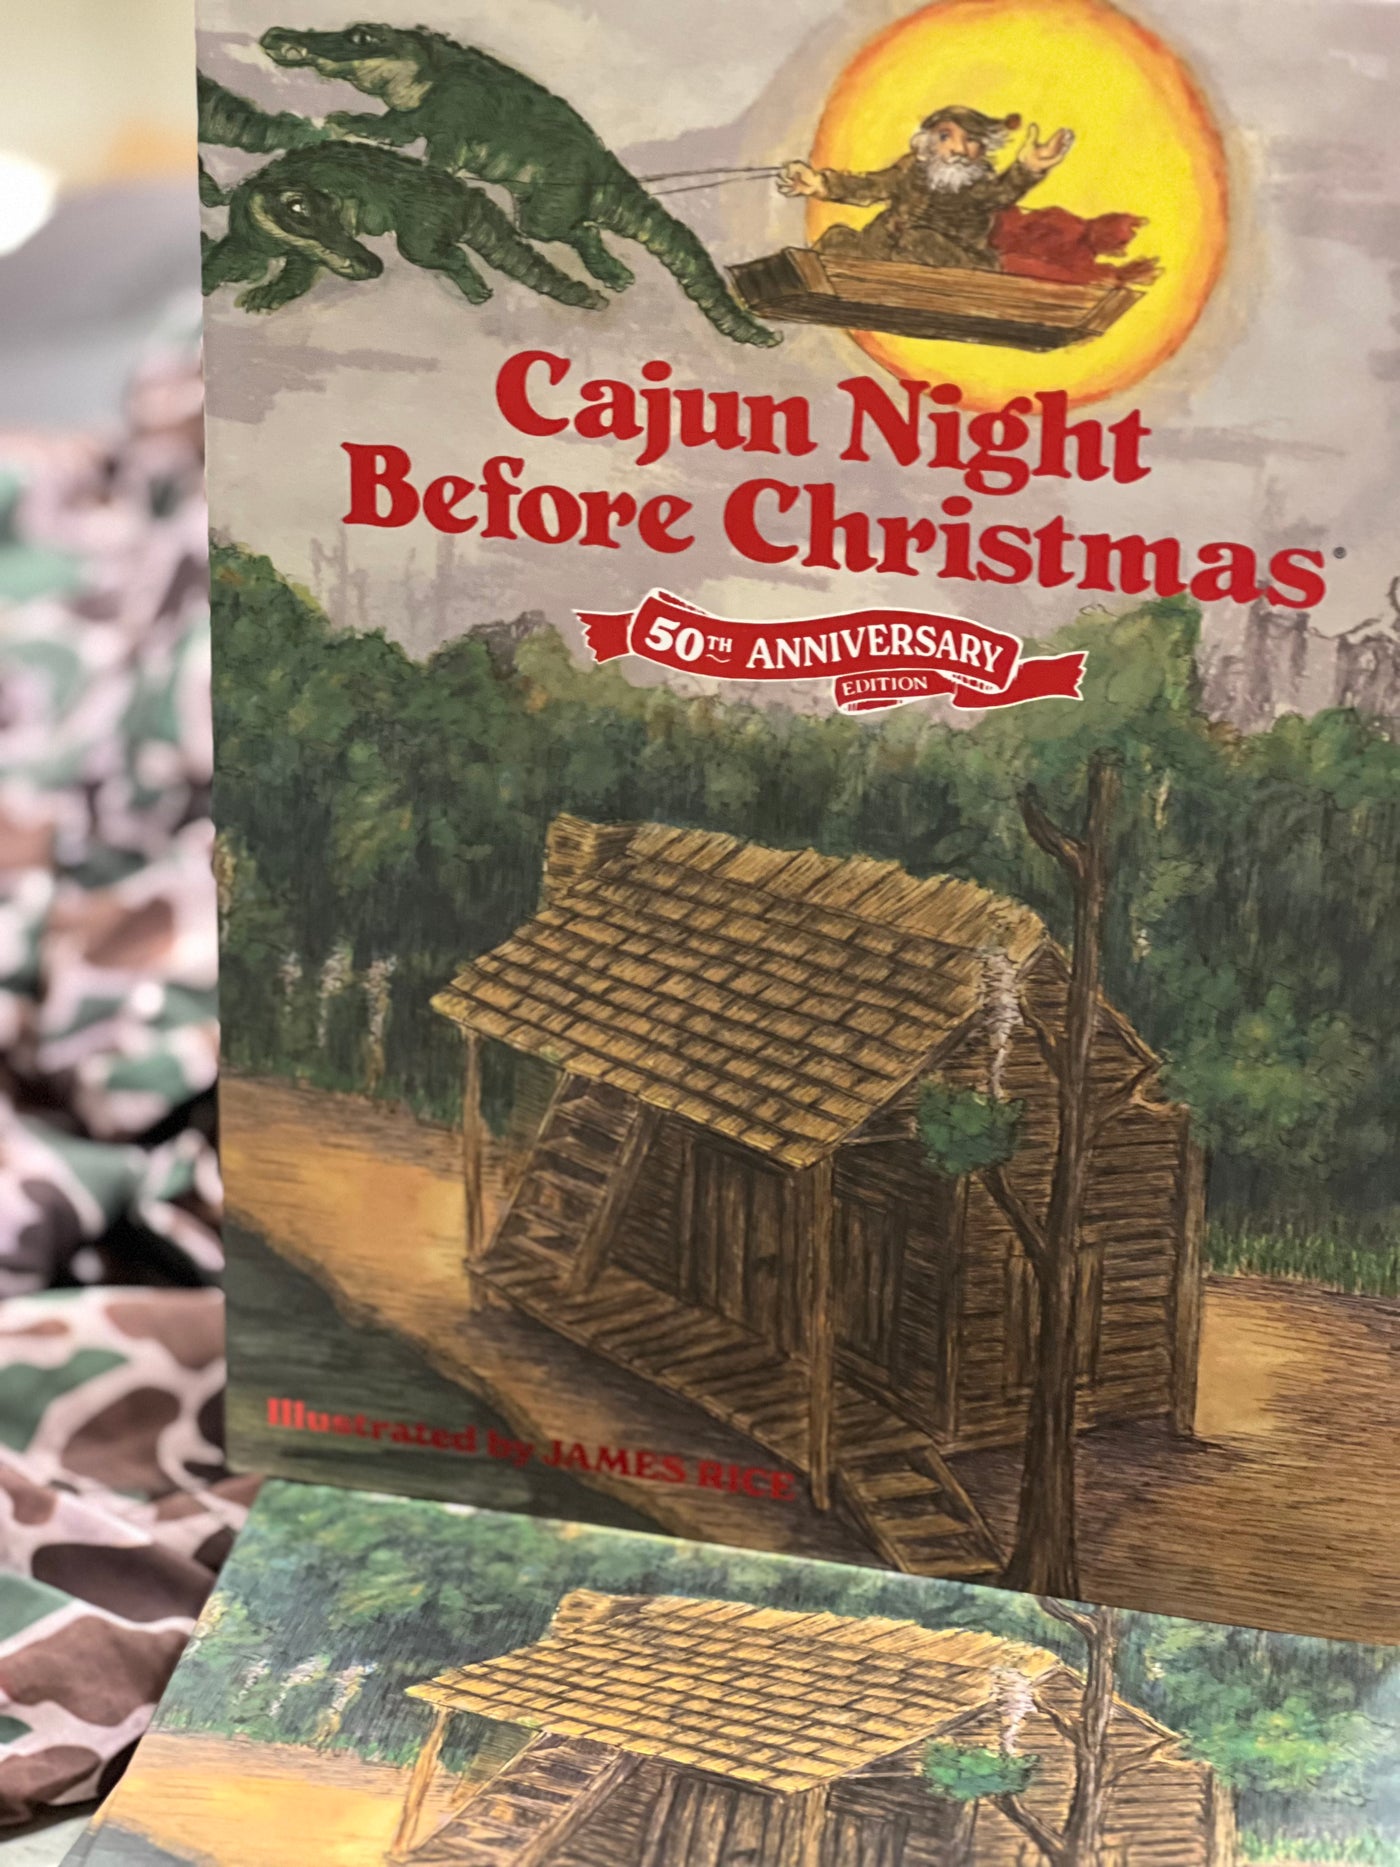 The Cajun Night Before Christmas